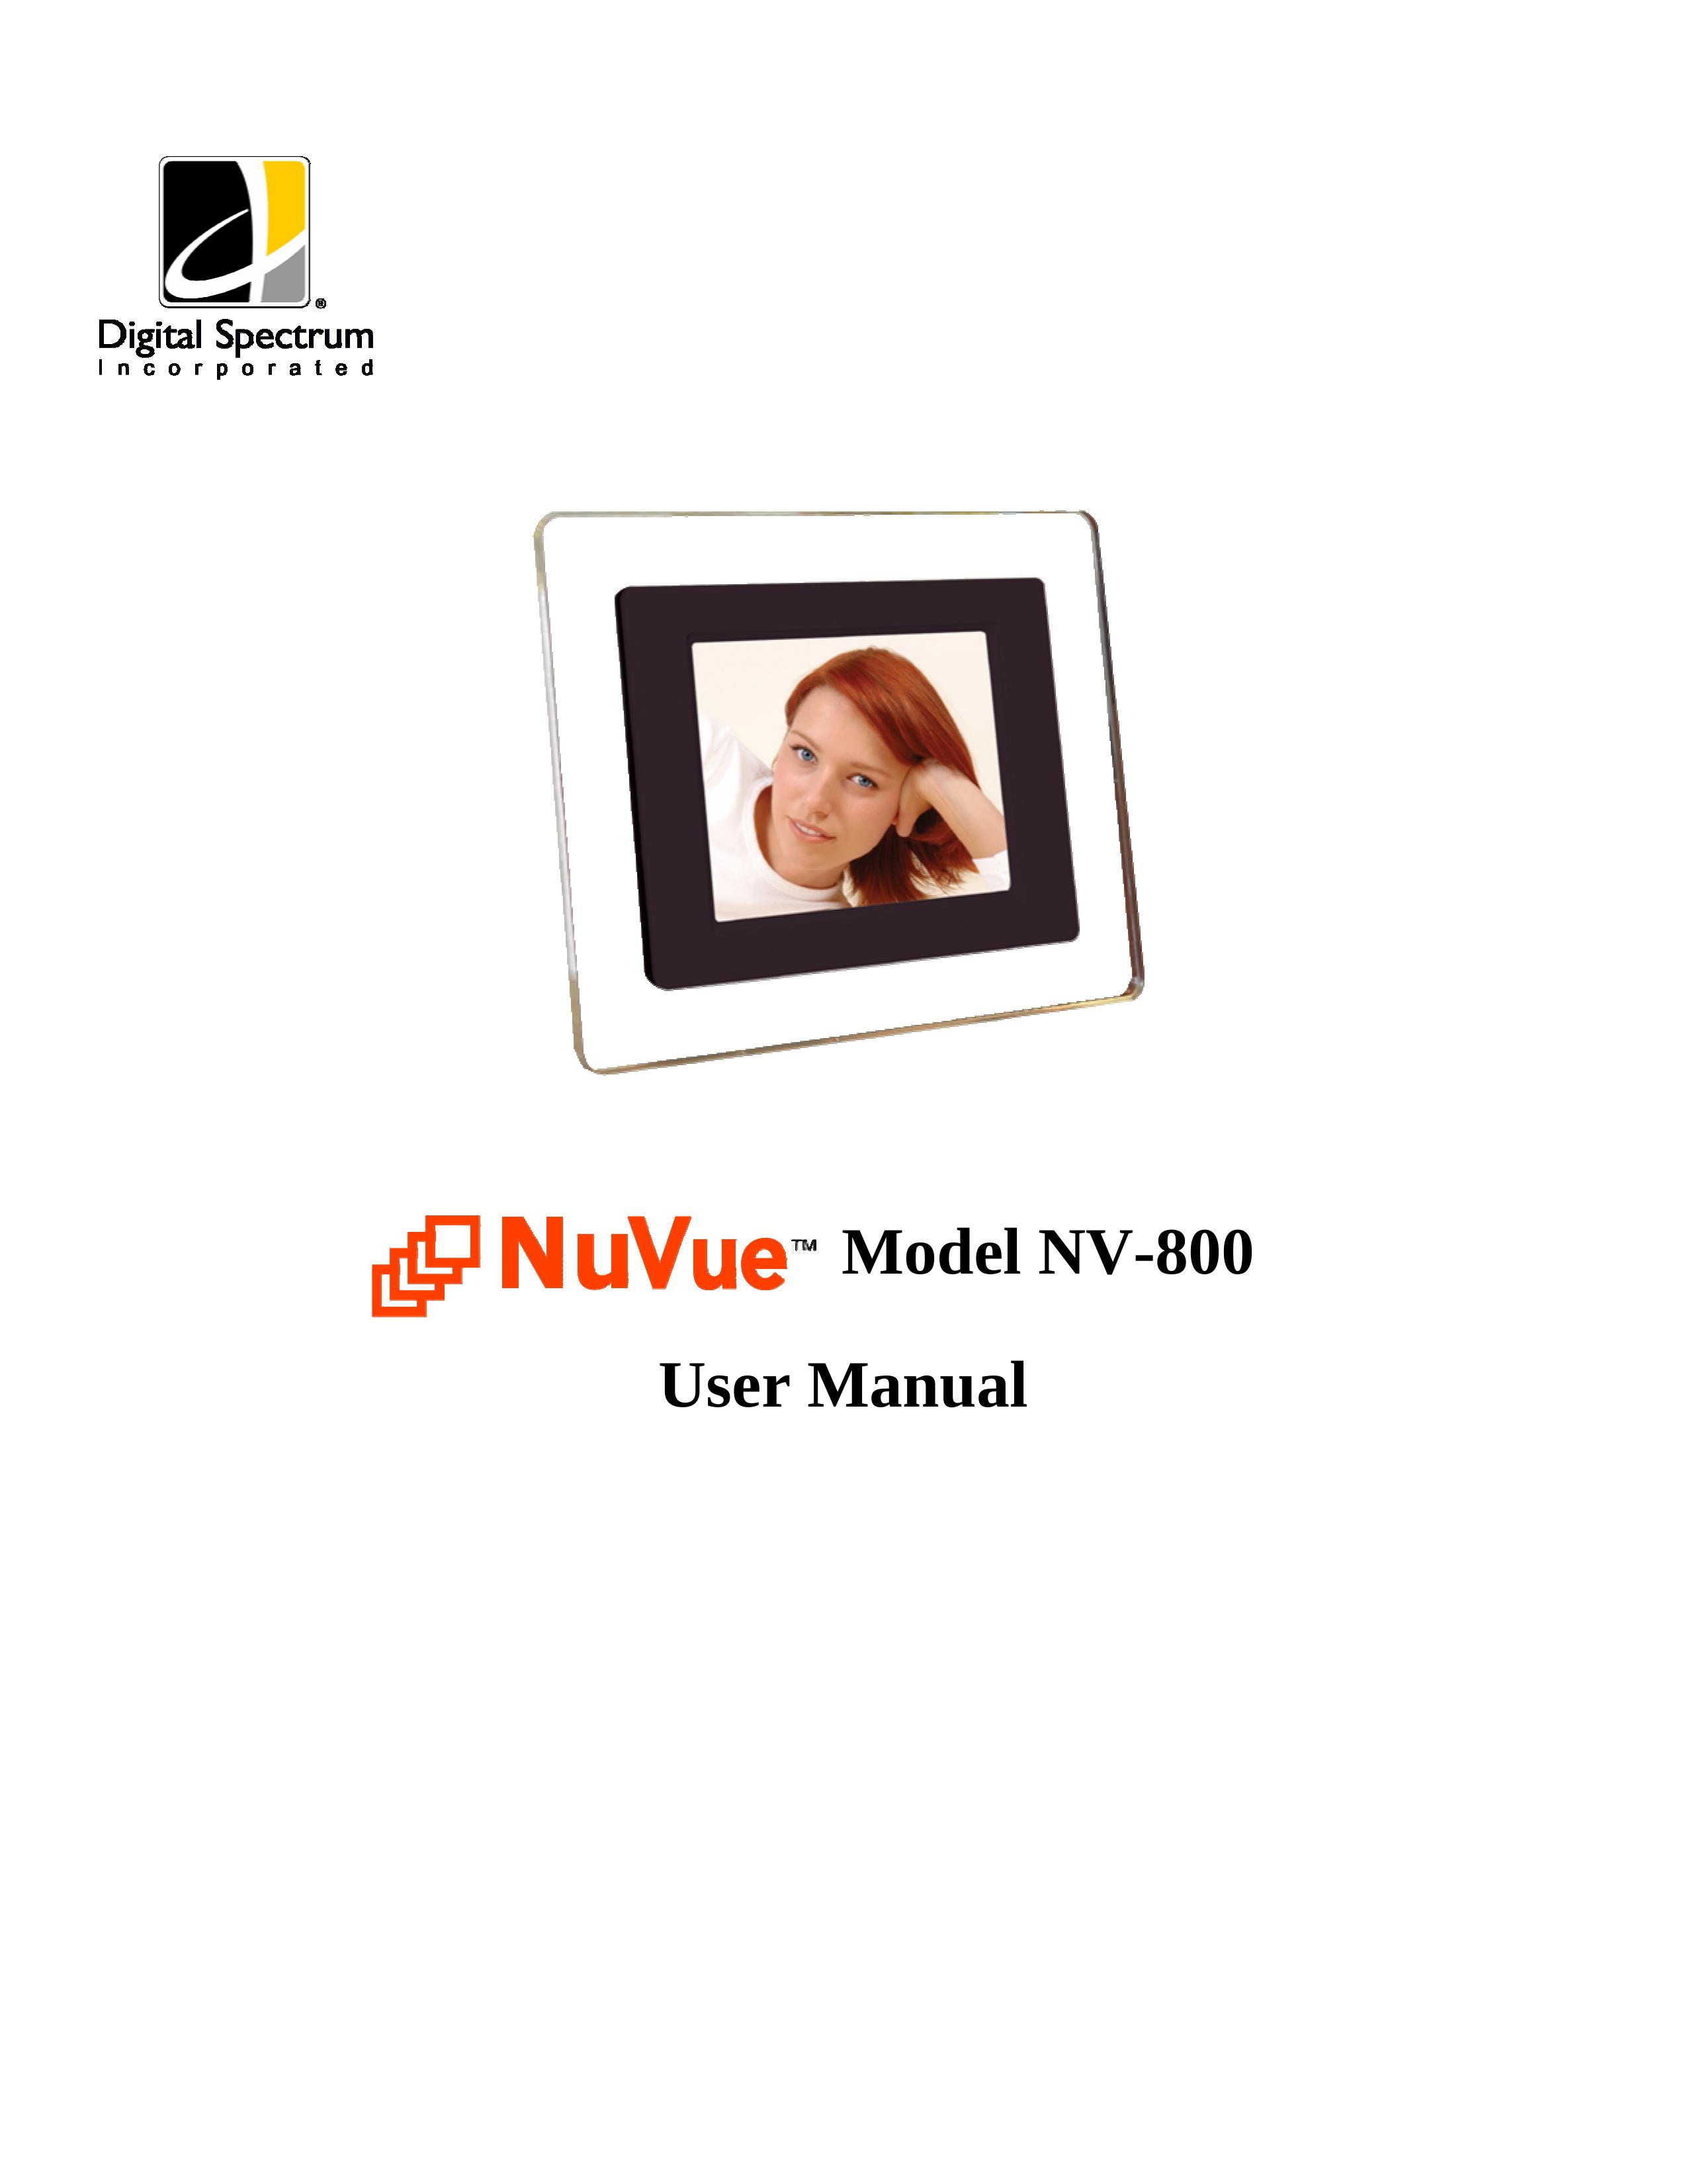 Digital Spectrum NV-800 Digital Photo Frame User Manual